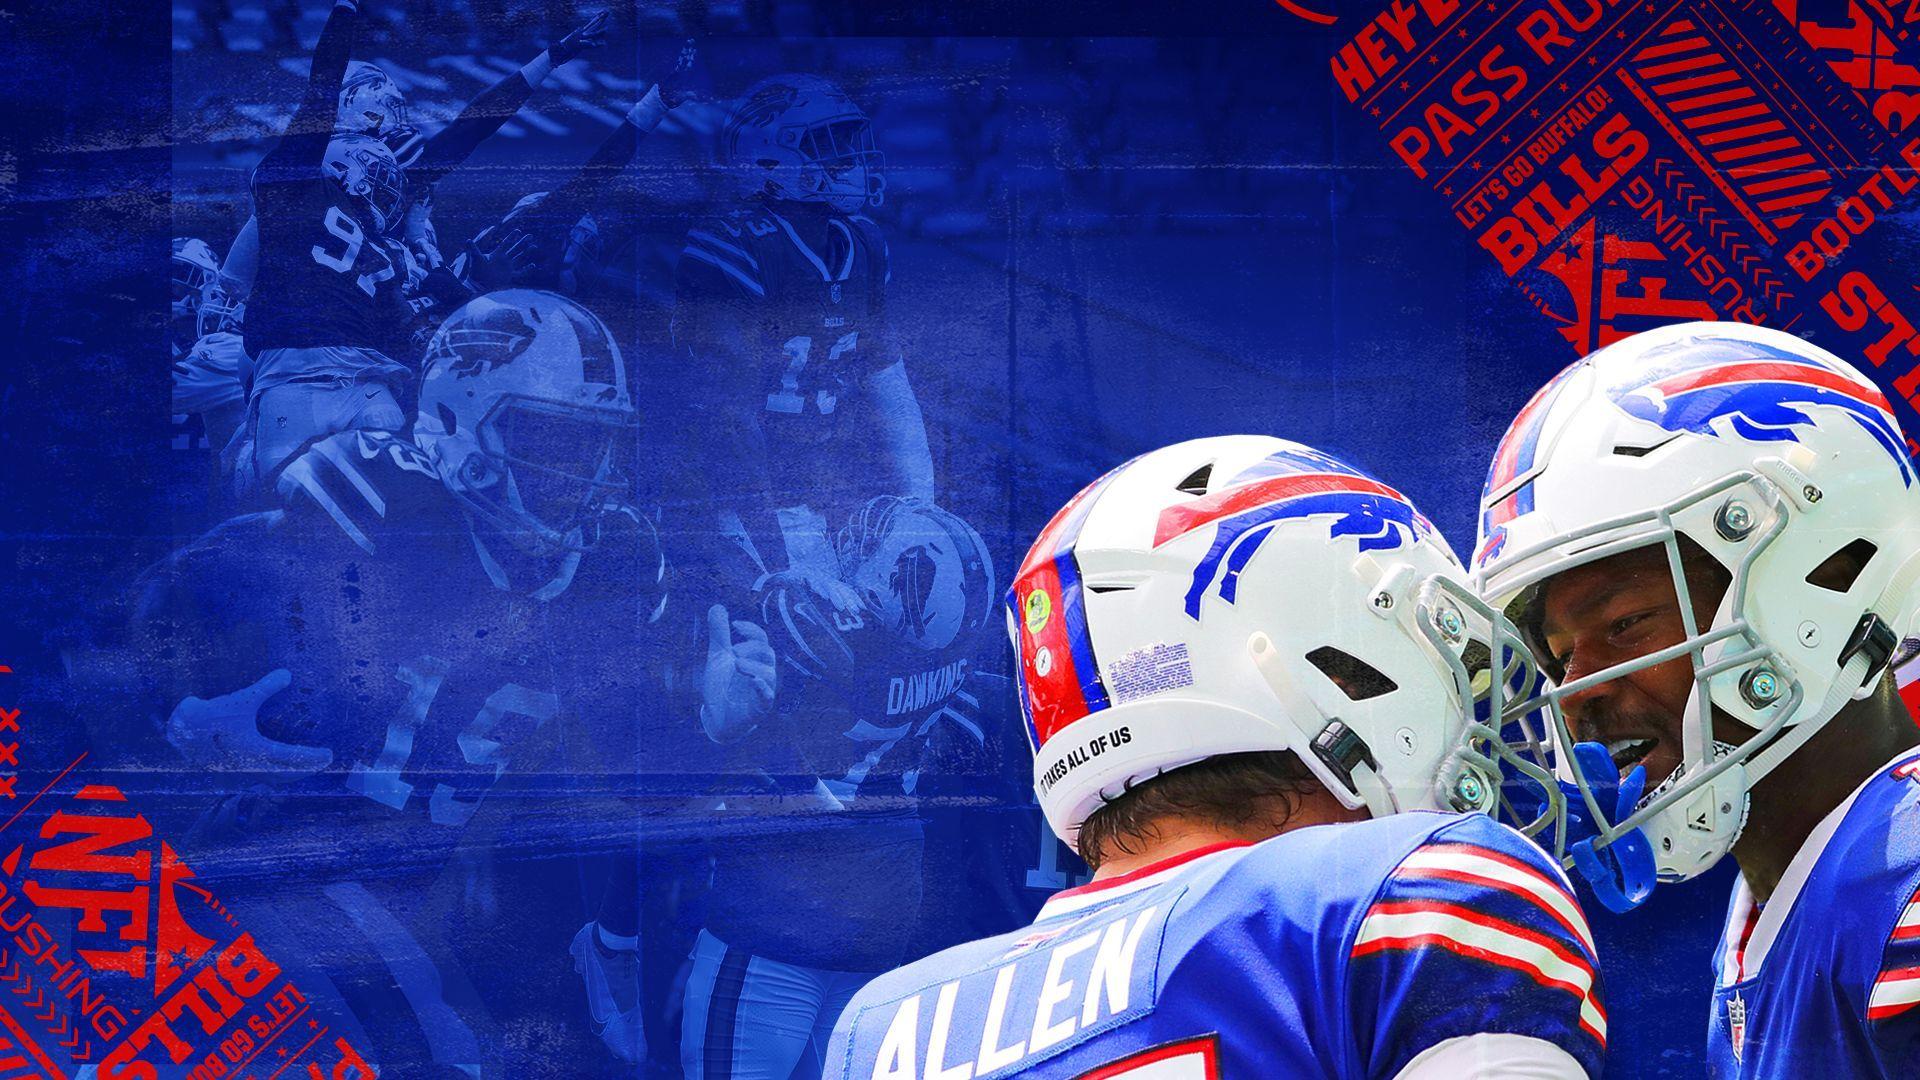 Buffalo Bills 4K Wallpapers Top Free Buffalo Bills 4K Backgrounds